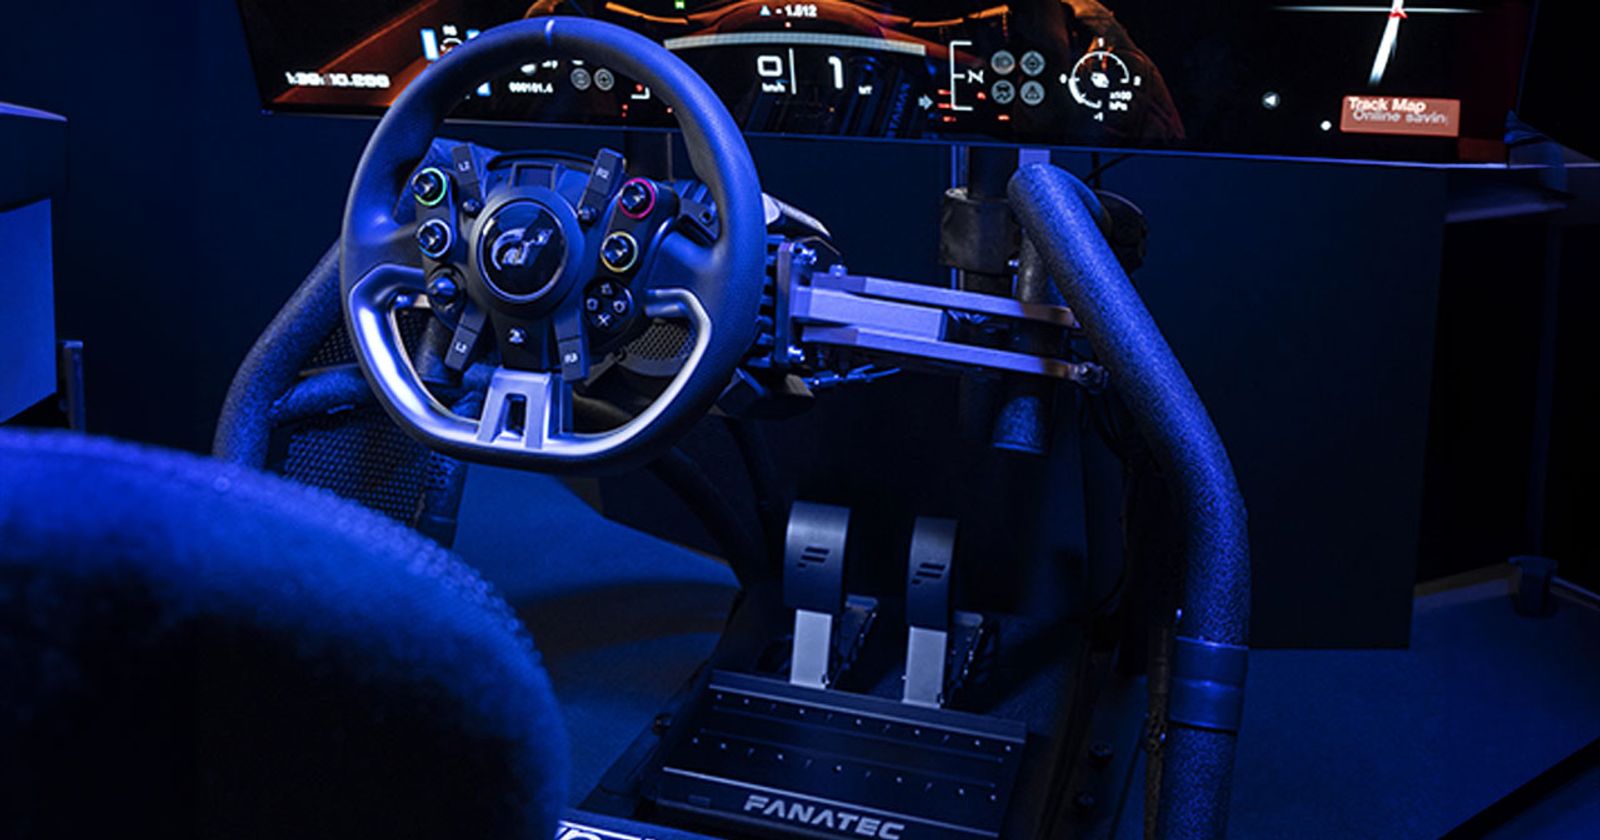 Fanatec GT DD Pro vs Thrustmaster T-GT II: Best PS5 Racing Wheel